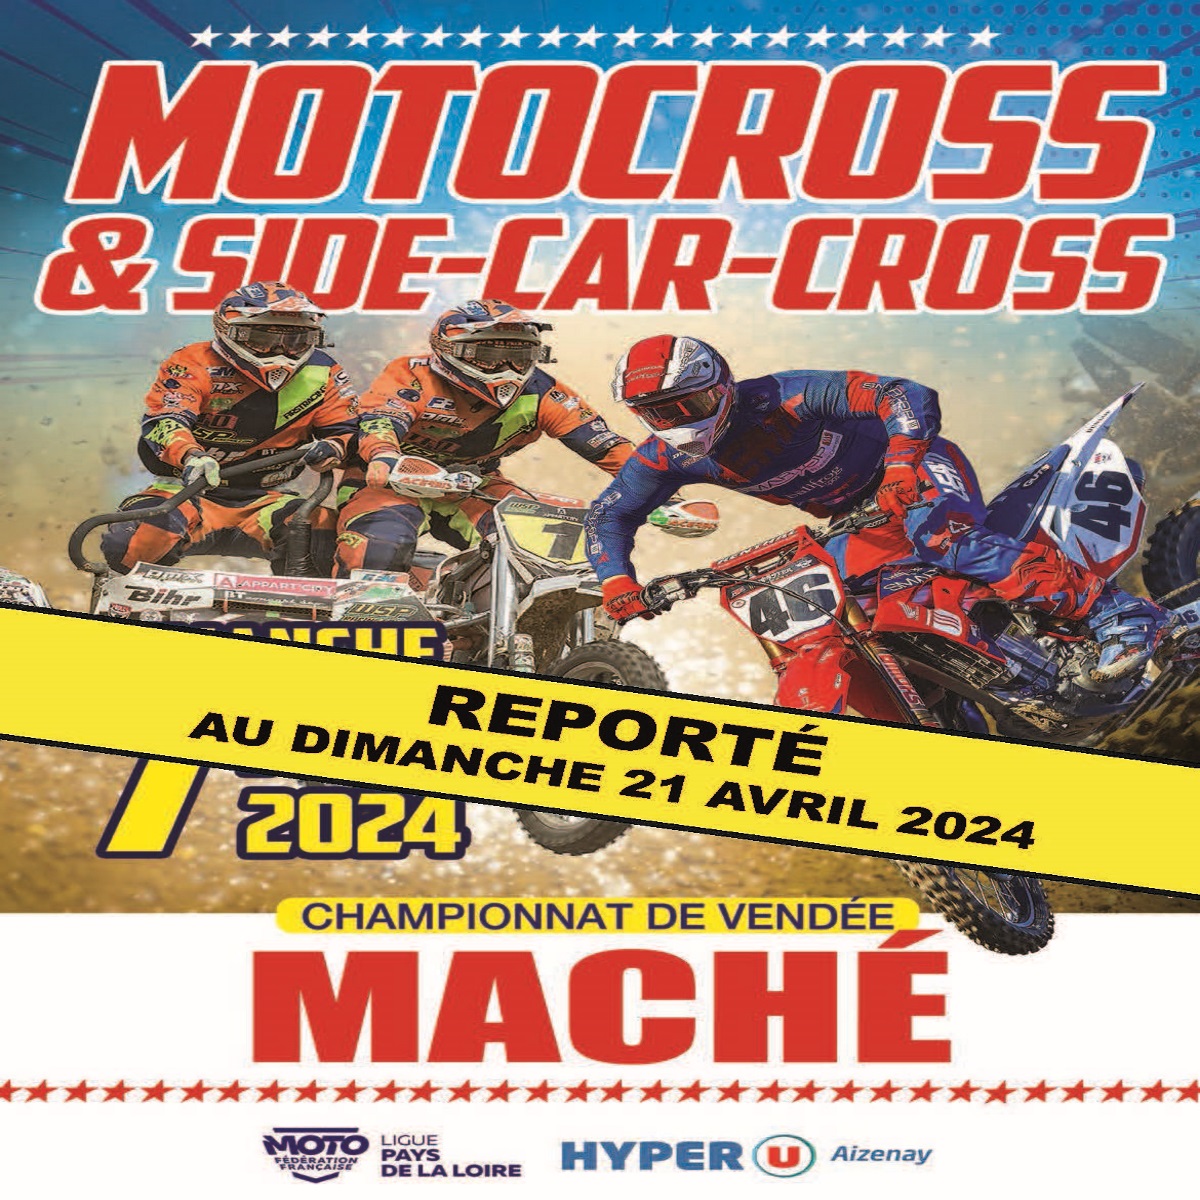 Info Motocross - Maché report 21 avril